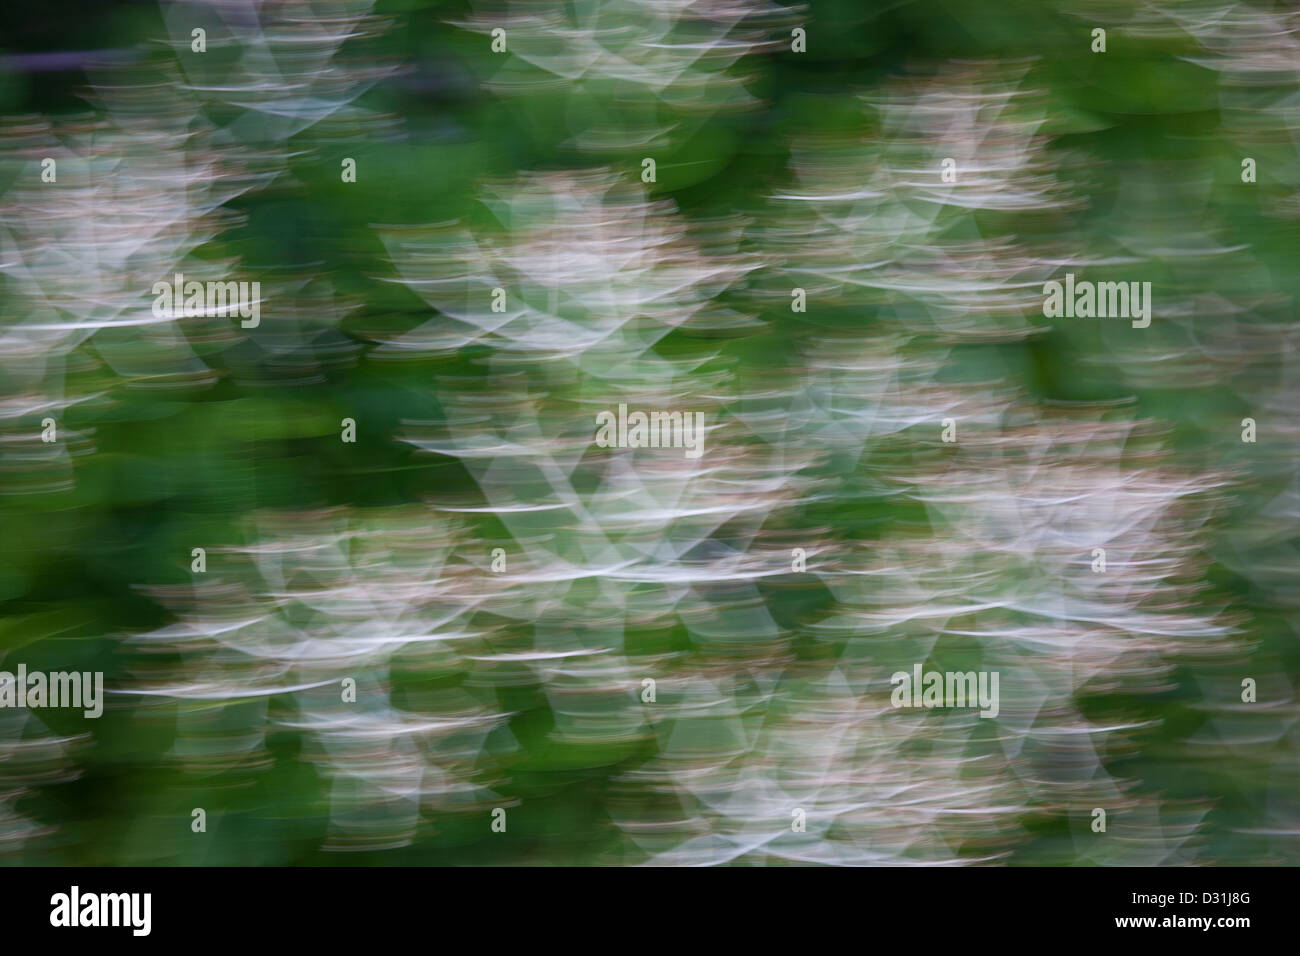 Abstract Espave trees in Soberania national park, Panama province, Republic of Panama. Stock Photo